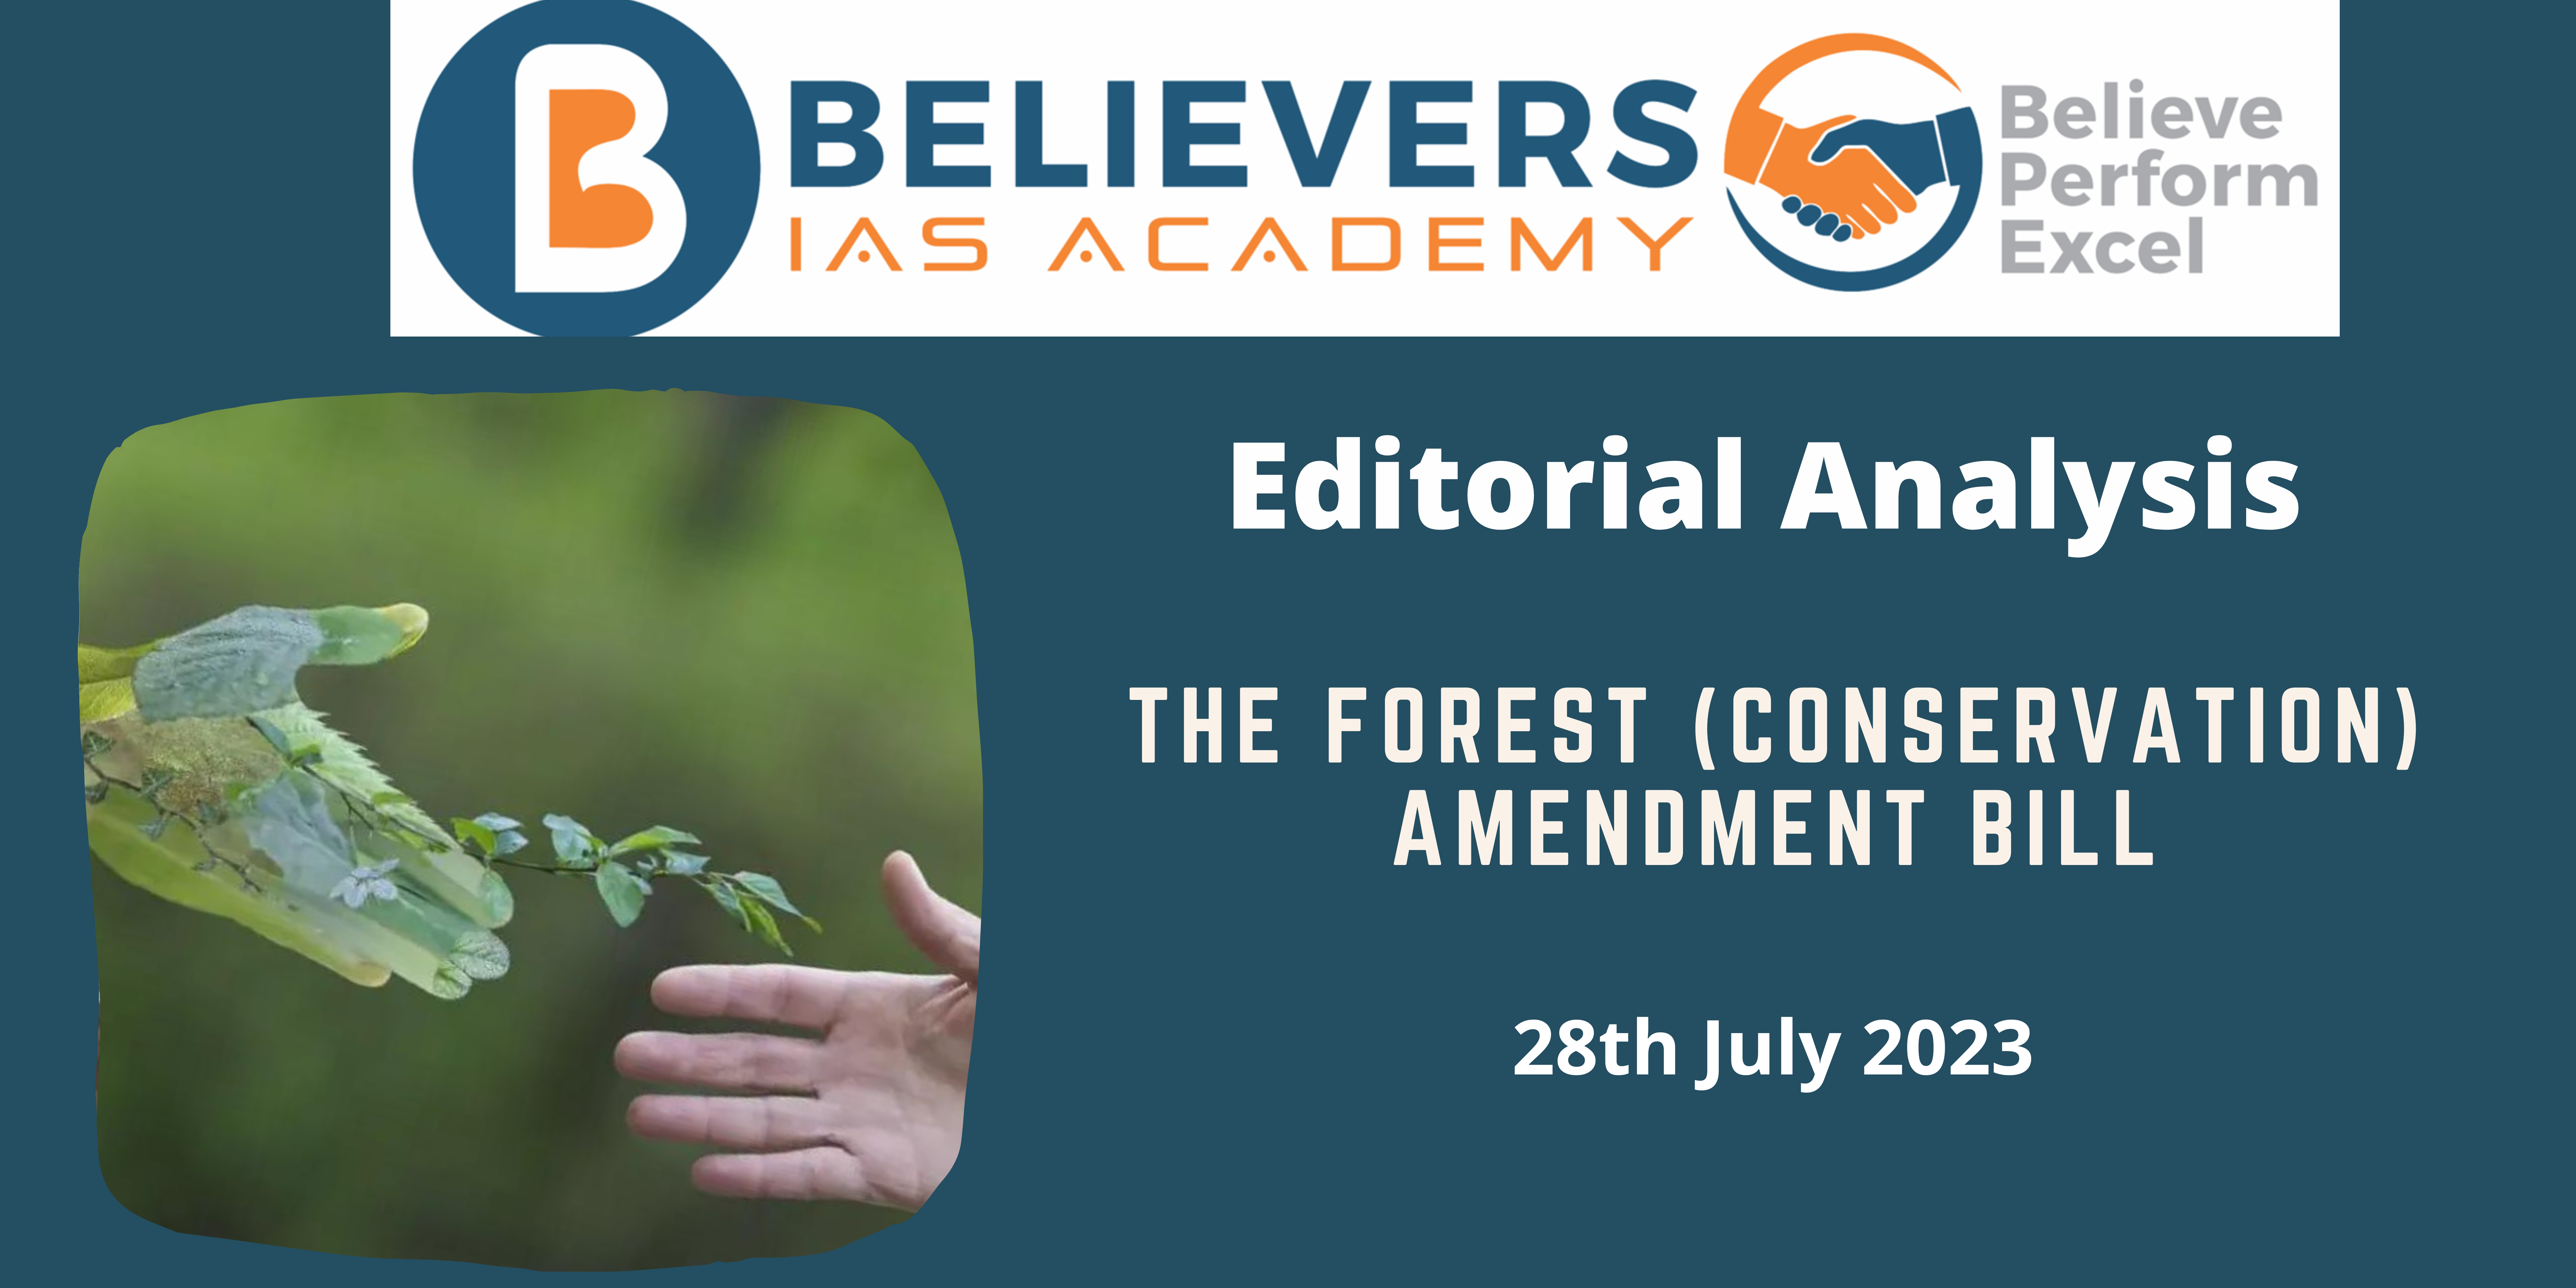 The Forest (Conservation) Amendment Bill